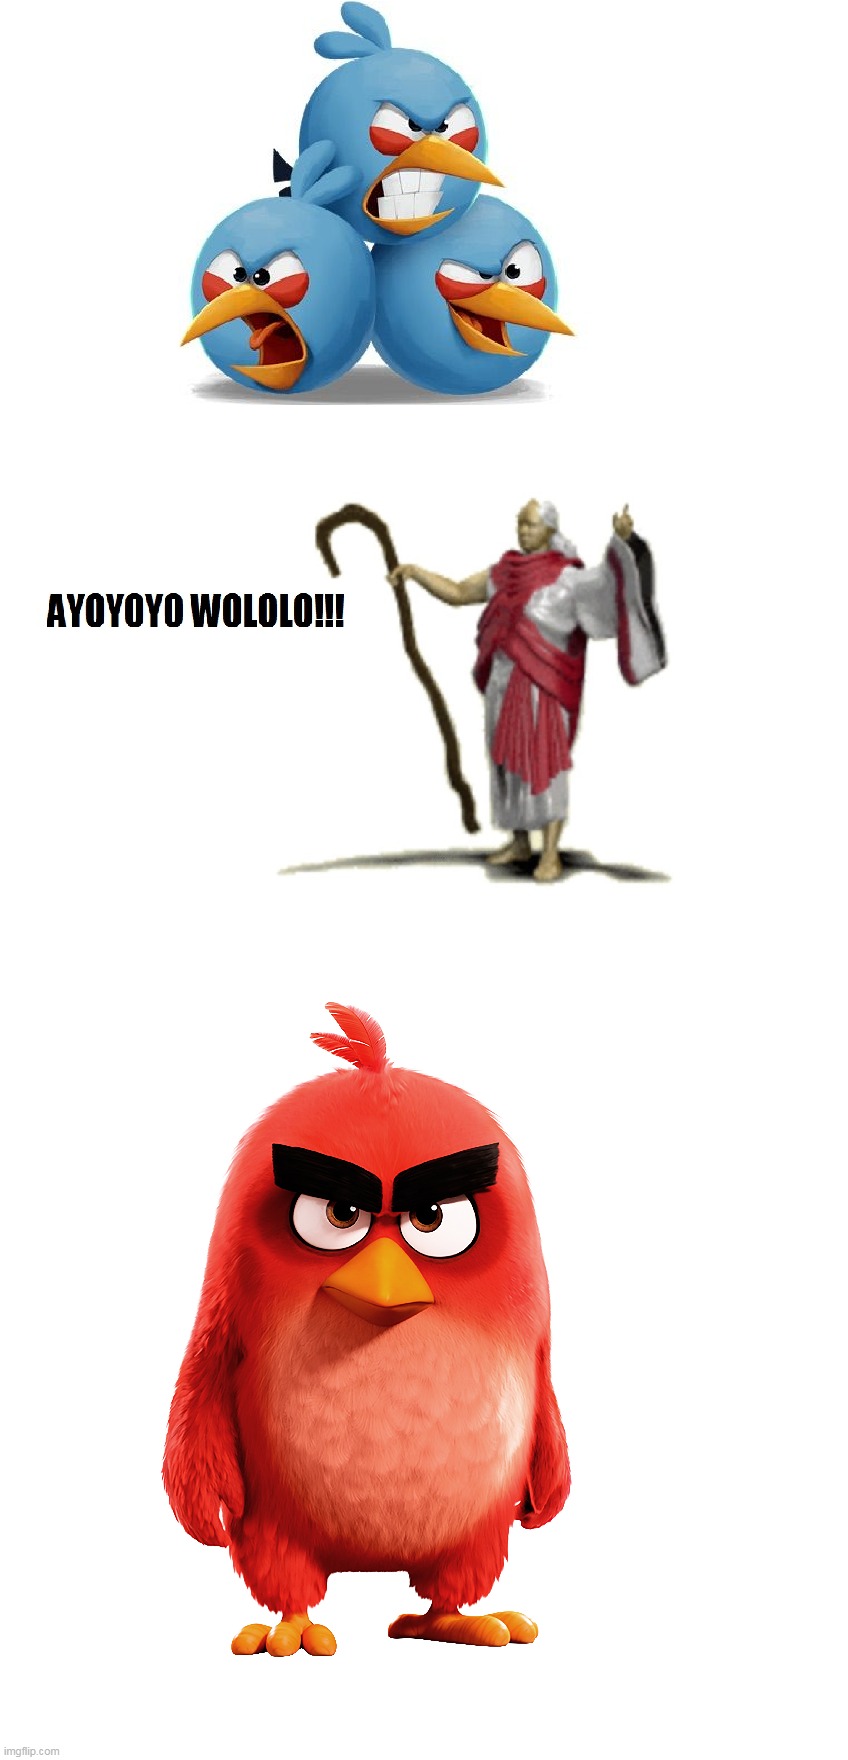 Ayoyoyo Wololo Meme #1 | image tagged in memes,angry birds,age of empires,ayoyoyo,wololo | made w/ Imgflip meme maker